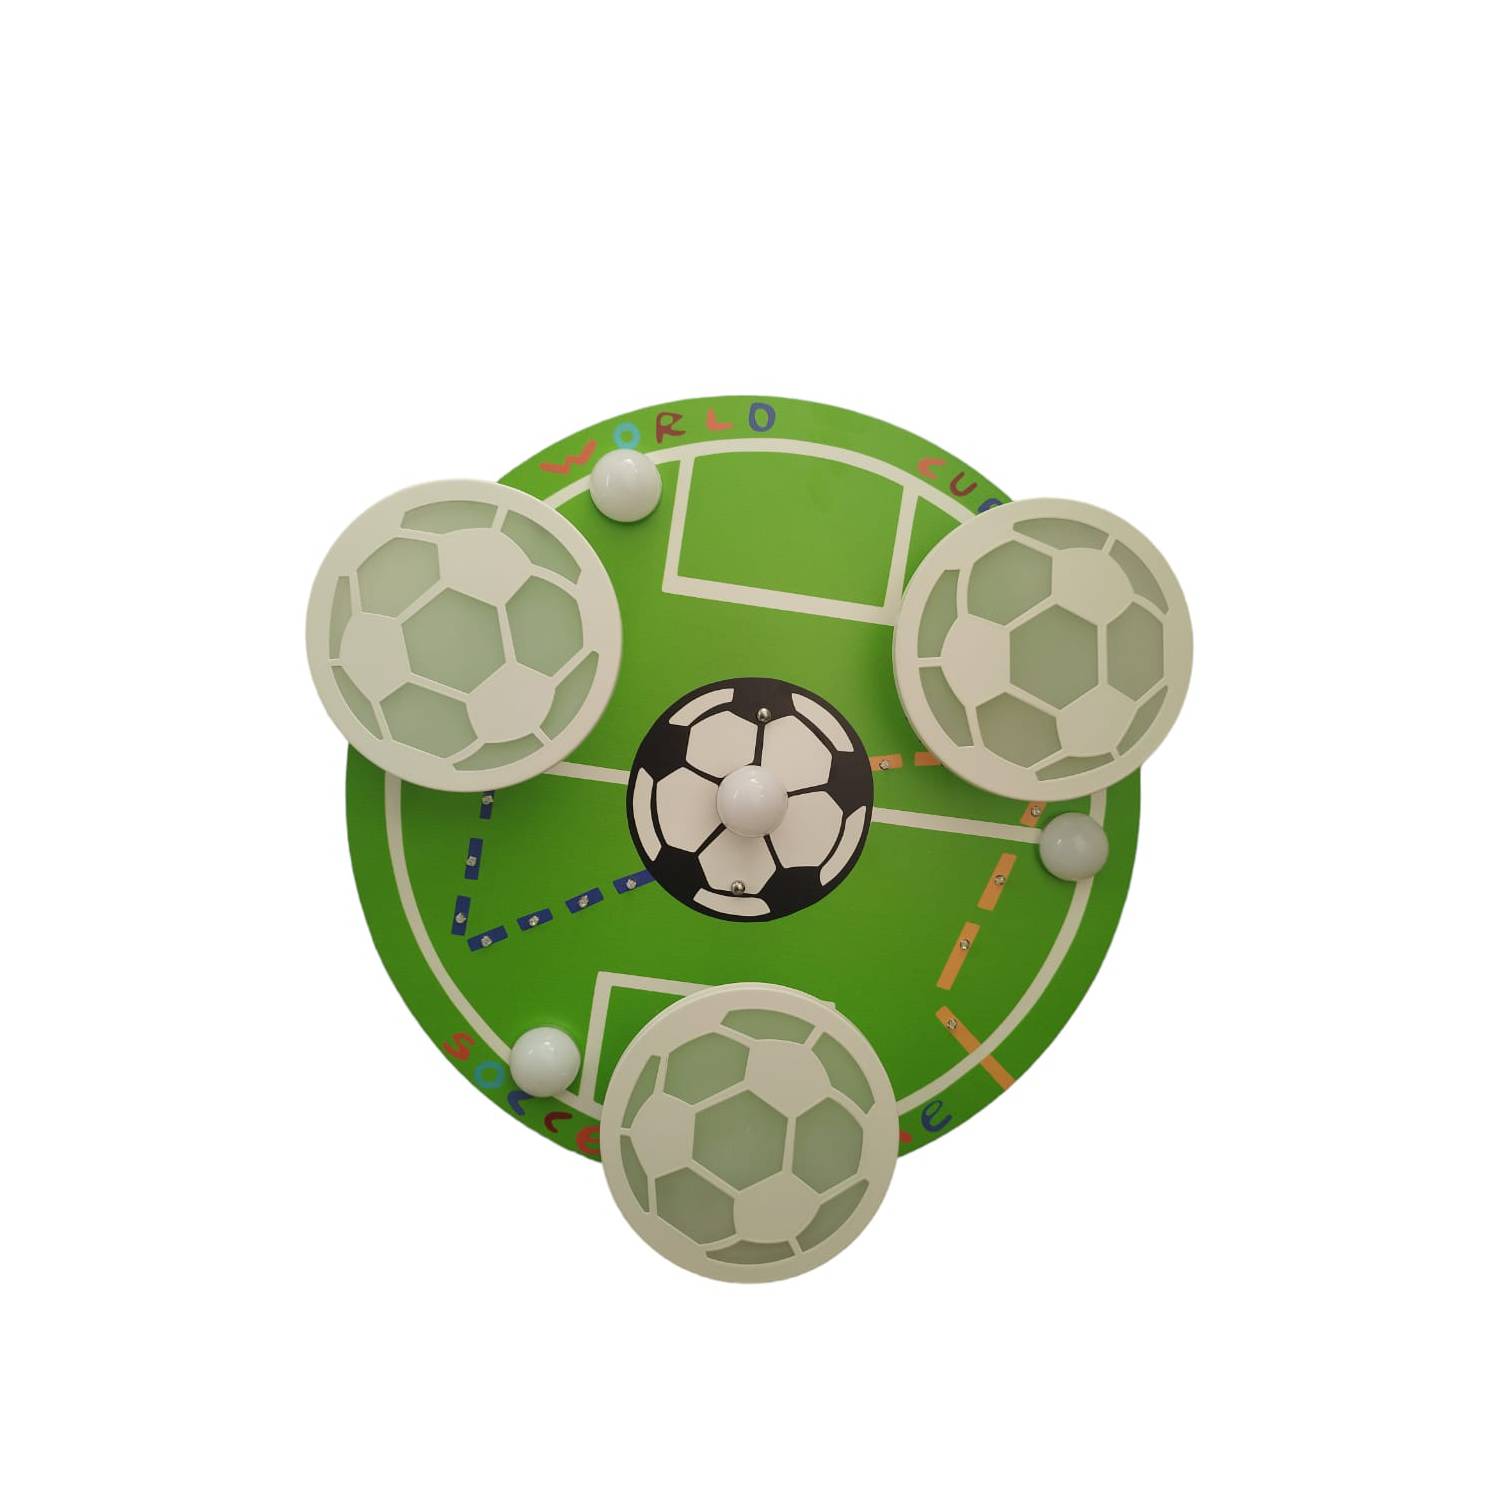 GENERICO Pelota De Fútbol Infantil con Diseño Color Verde